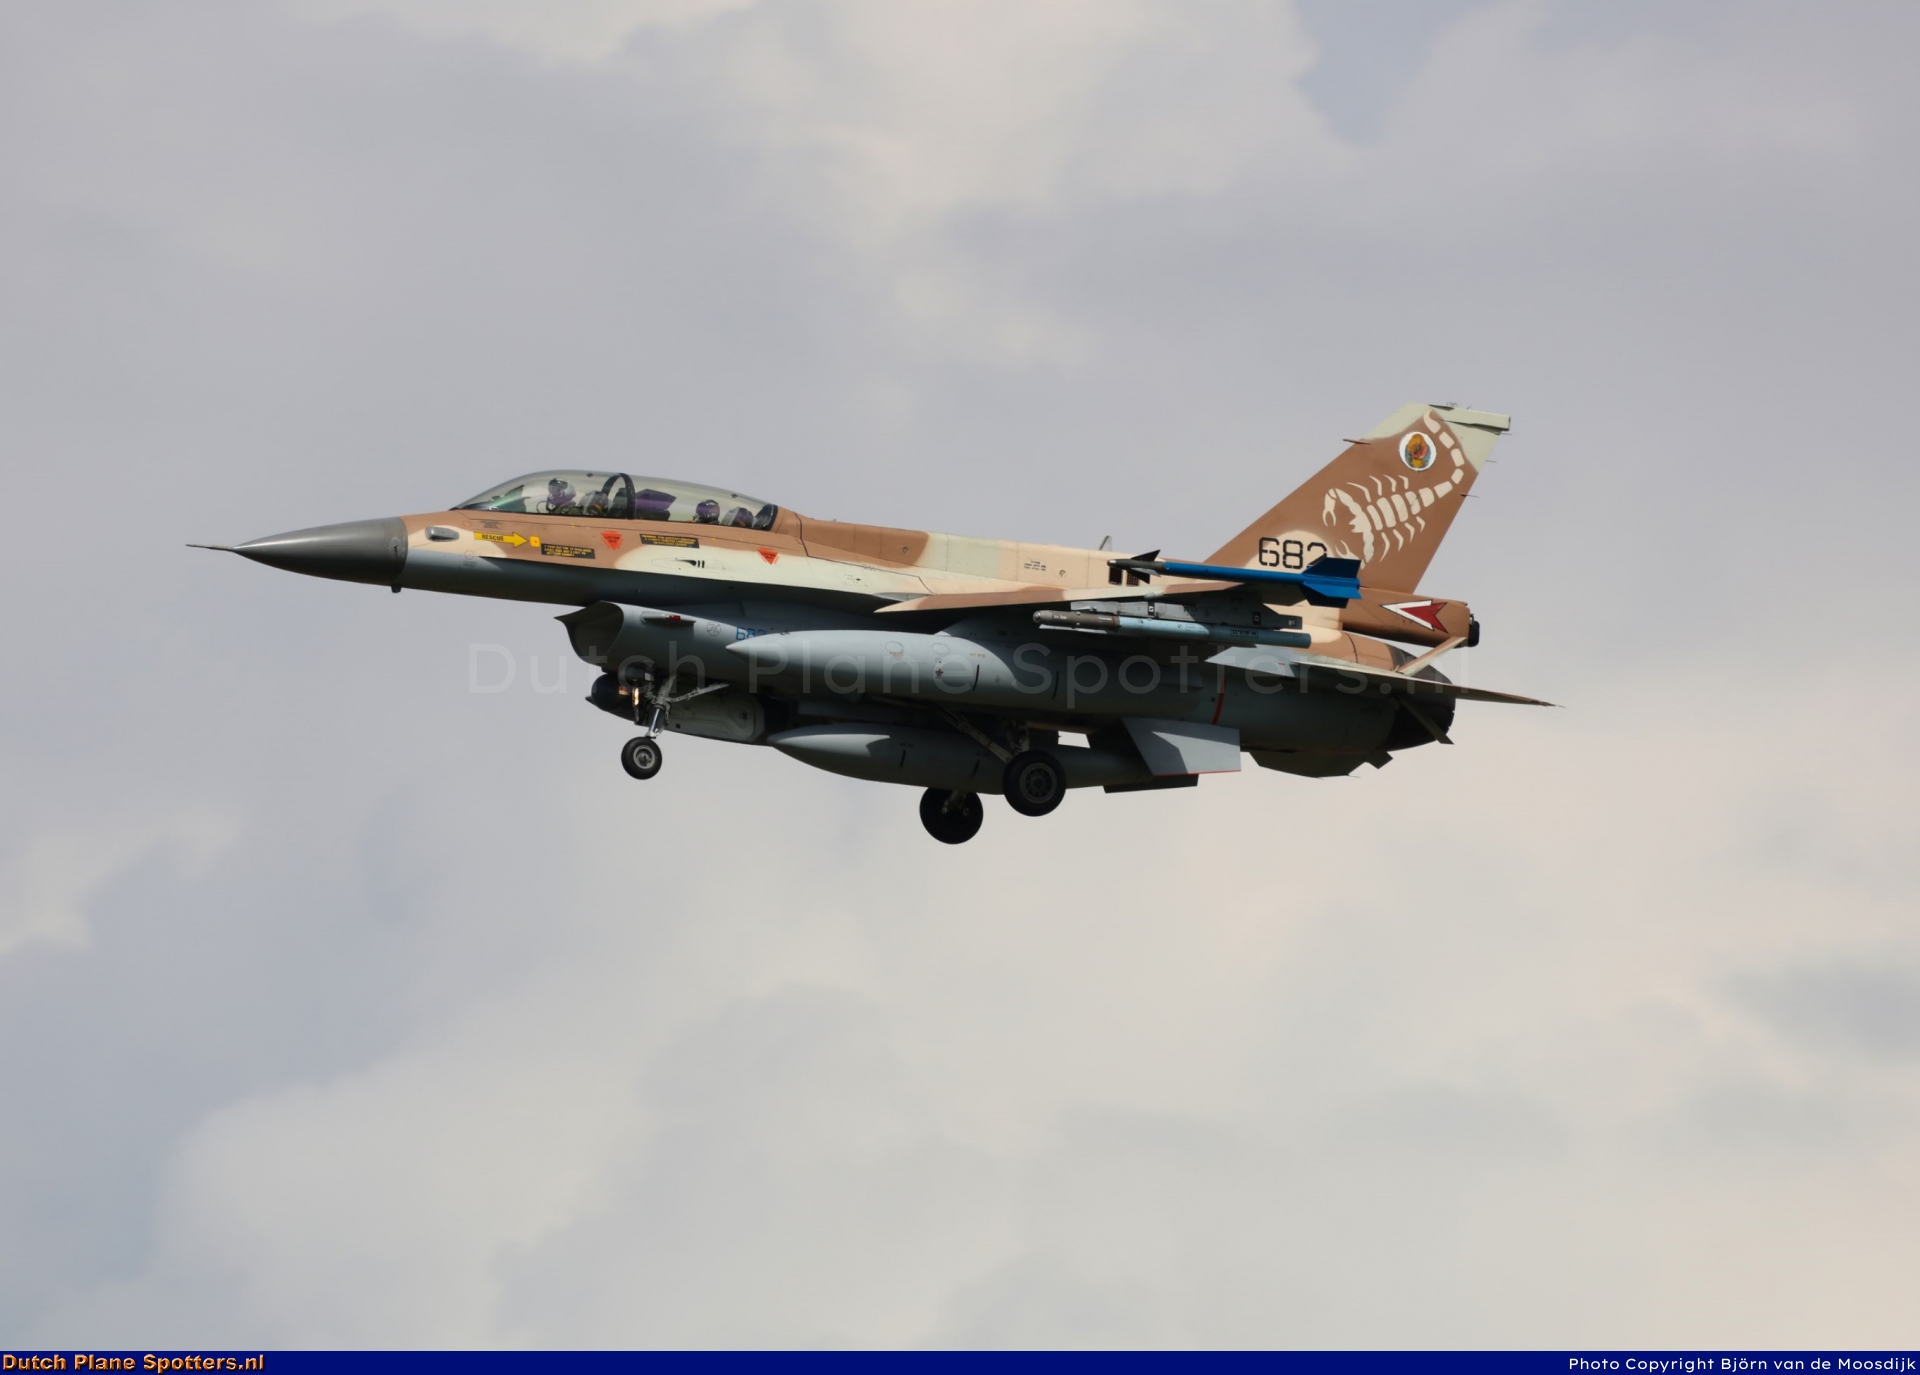 682 General Dynamics F-16 Fighting Falcon MIL - Israeli Air Force by Bjorn van de Moosdijk